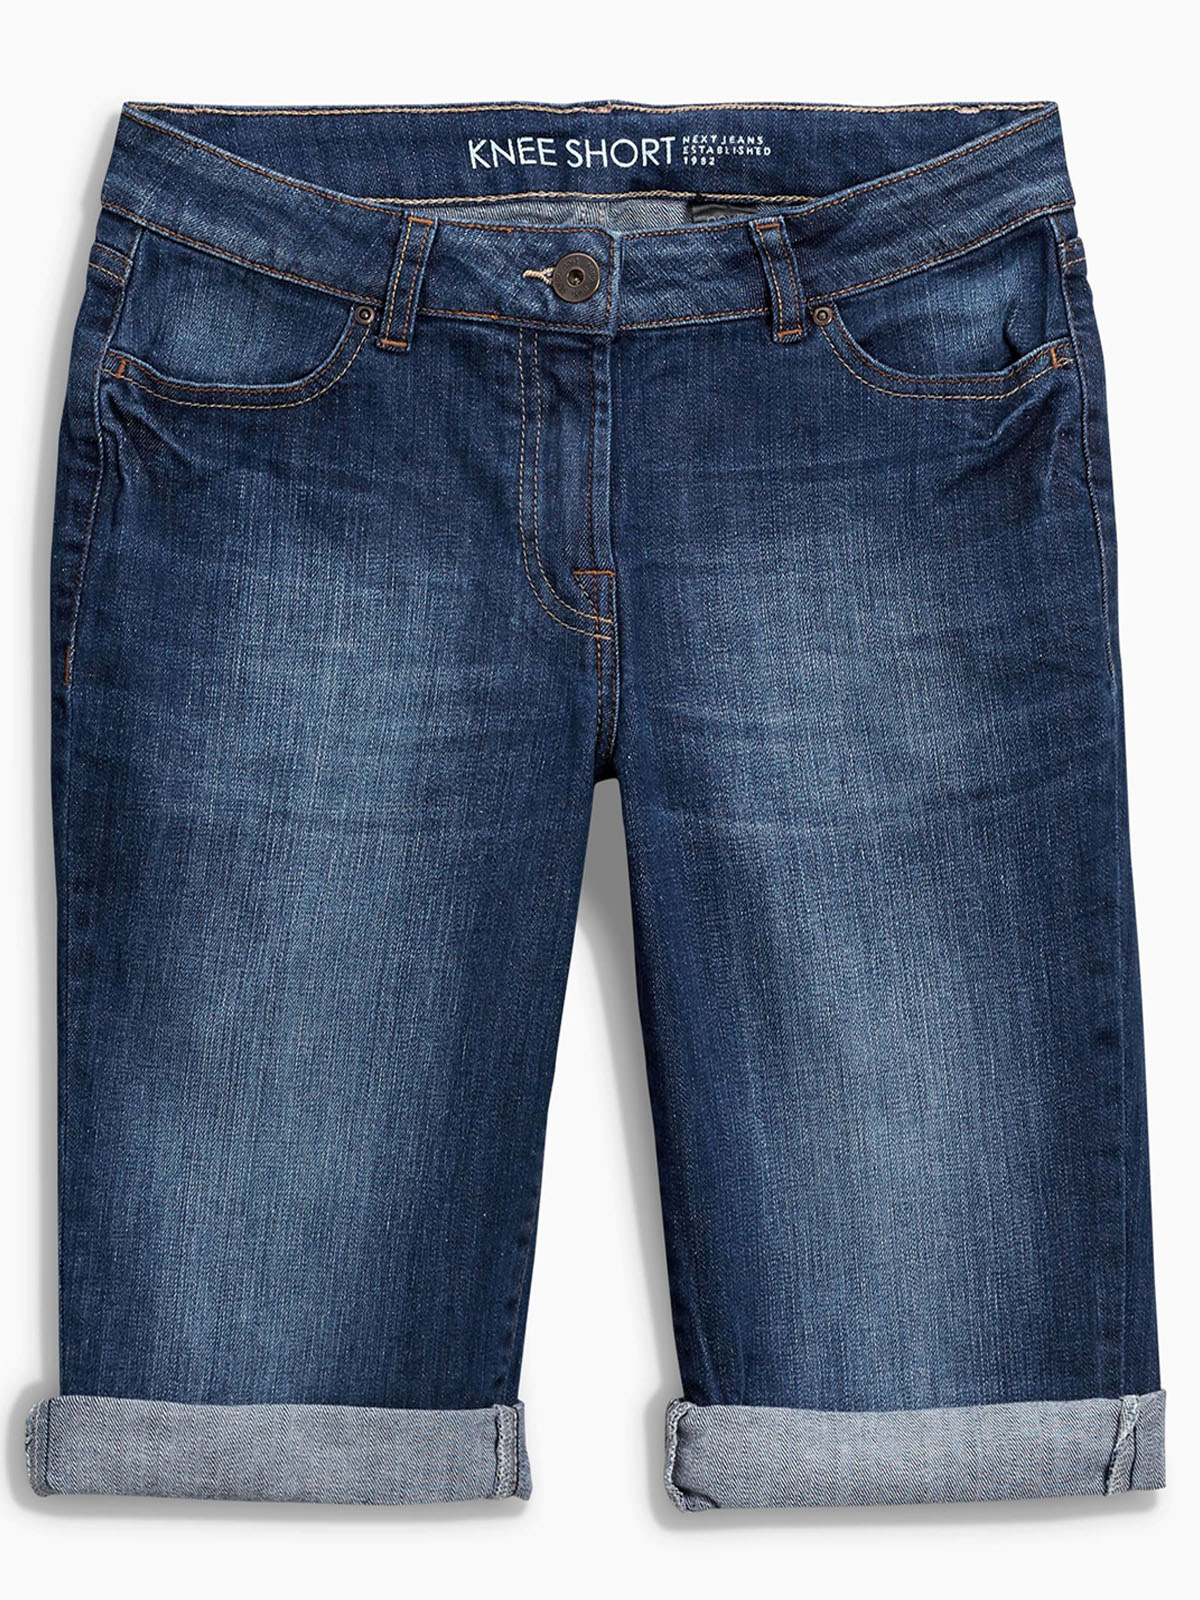 N3XT MID-BLUE Cotton Rich Denim Knee Shorts - Size 6 to 22